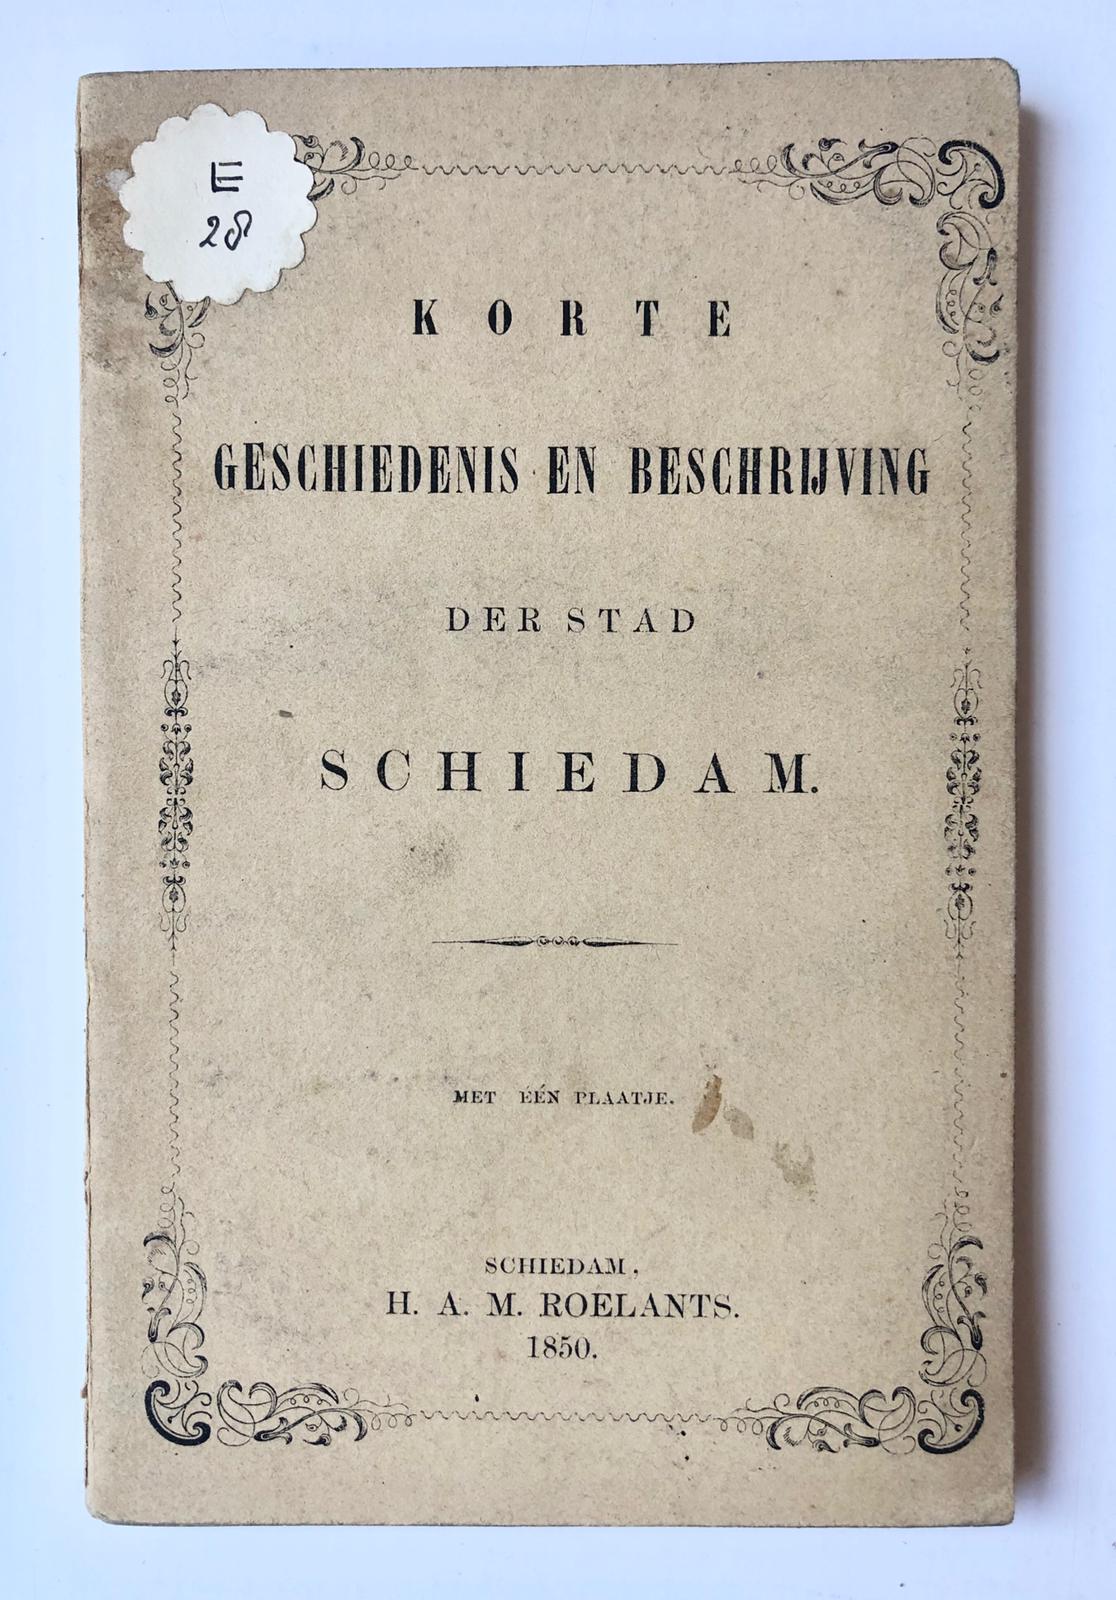  - [Rotterdam] Korte geschiedenis en beschrijving der stad Schiedam. Met n plaatjse. H. A. M. Roelants, Schiedam, 1850, 52 pp.